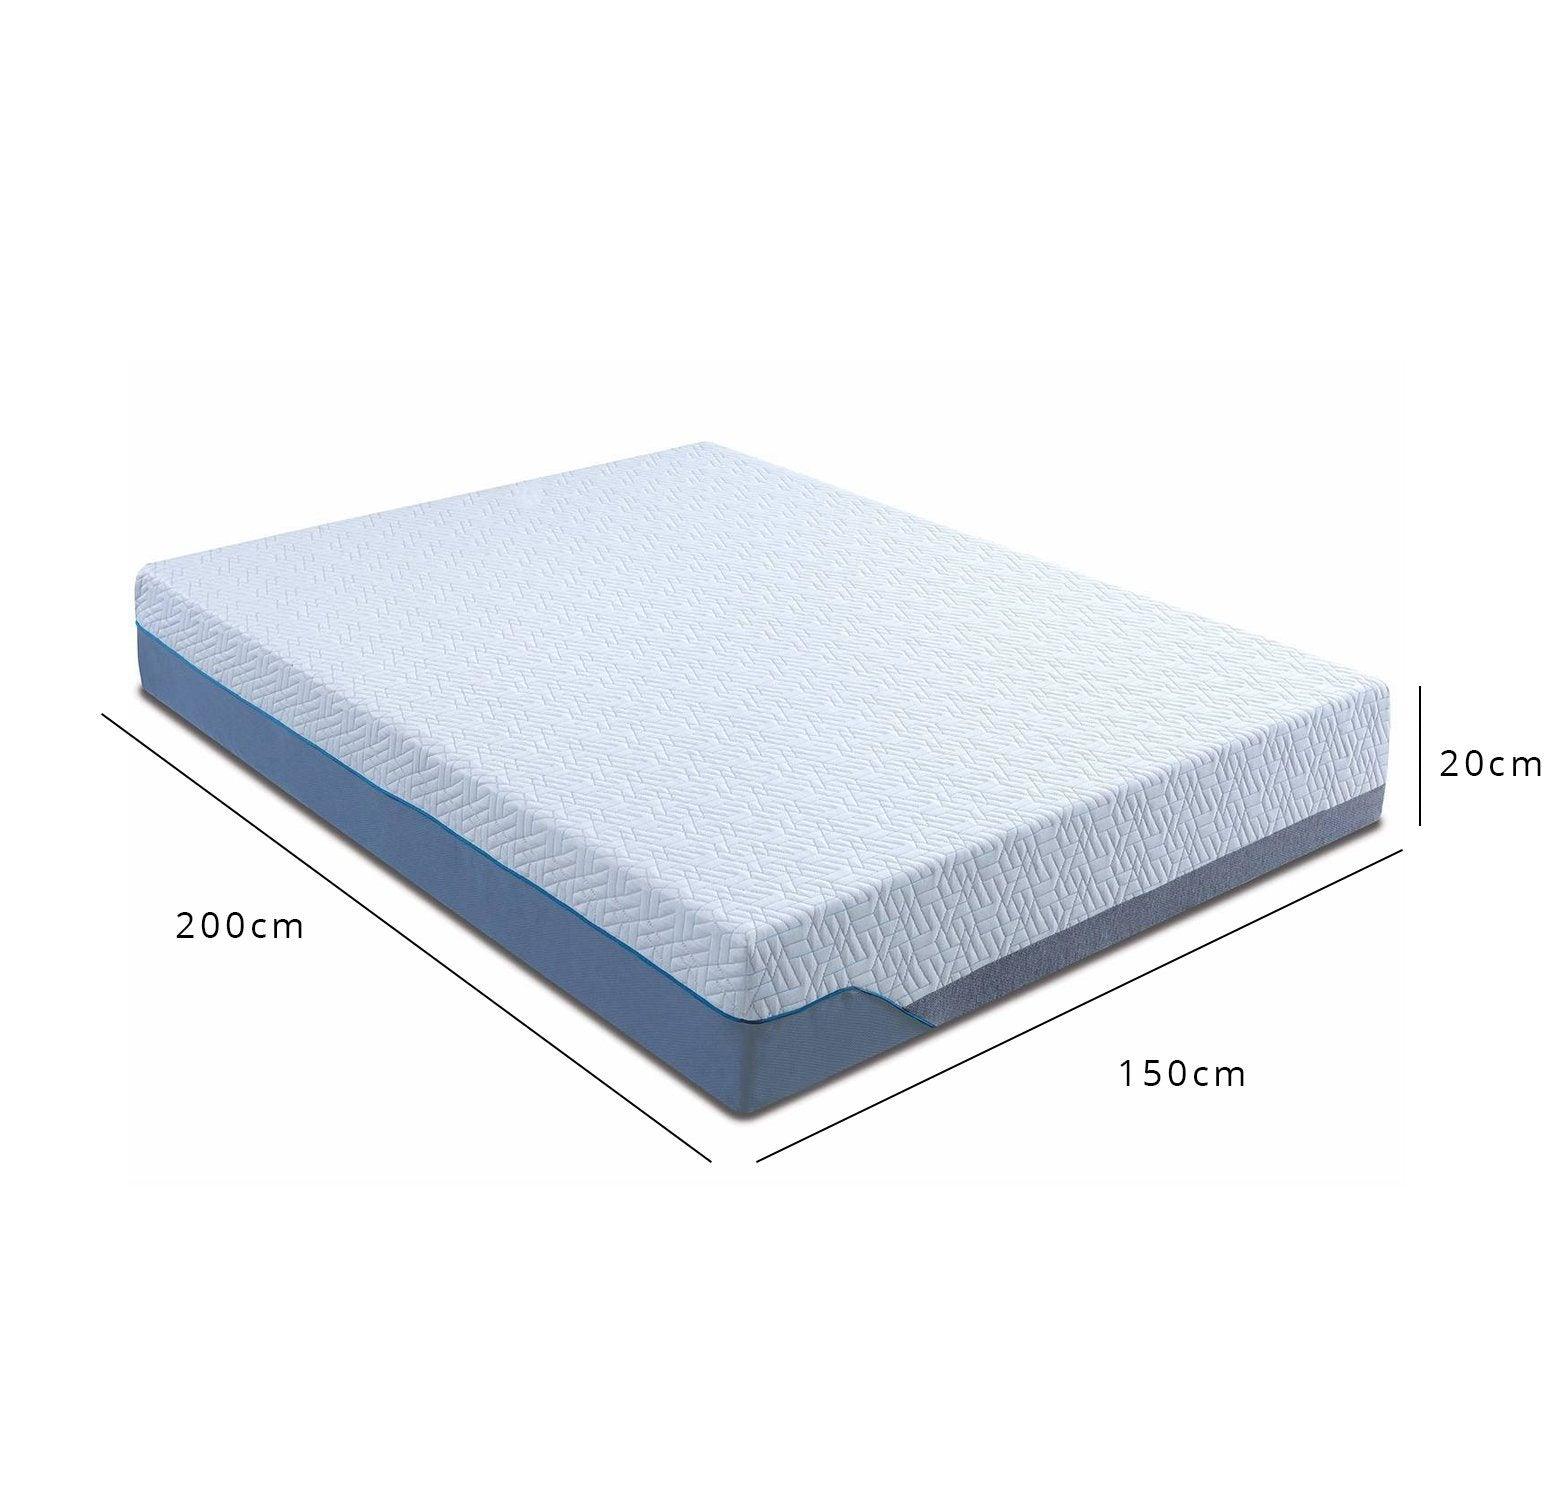 Pocket sprung mattress King 150cm - Laura James